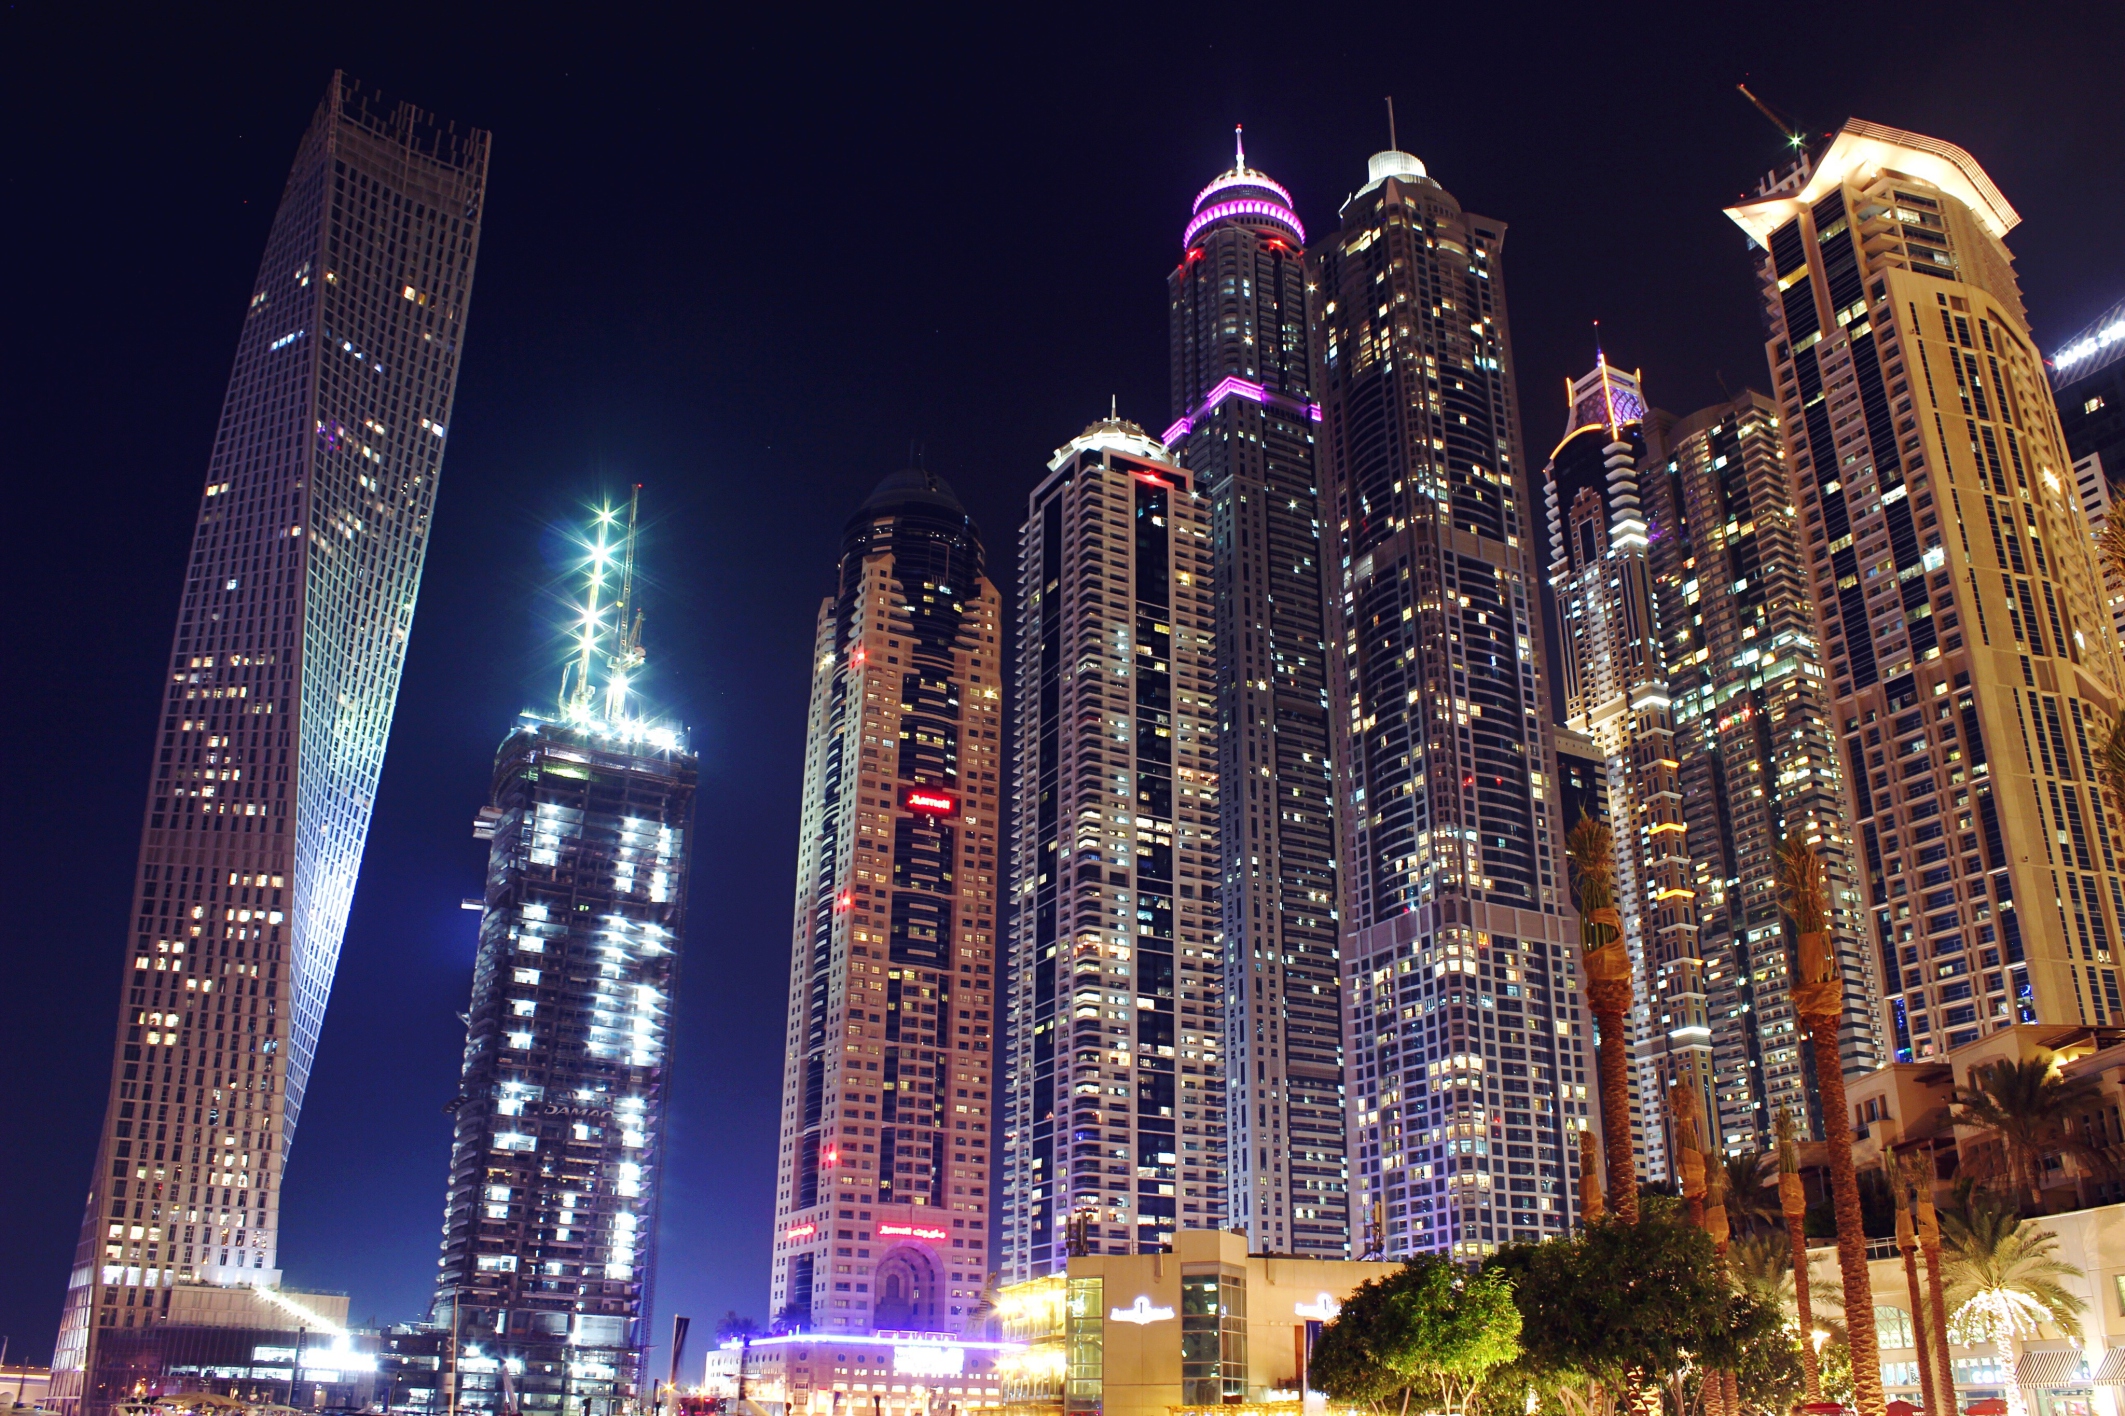 Low Angle View Of Illuminated Modern Skyscrapers At Dubai Marina During Night